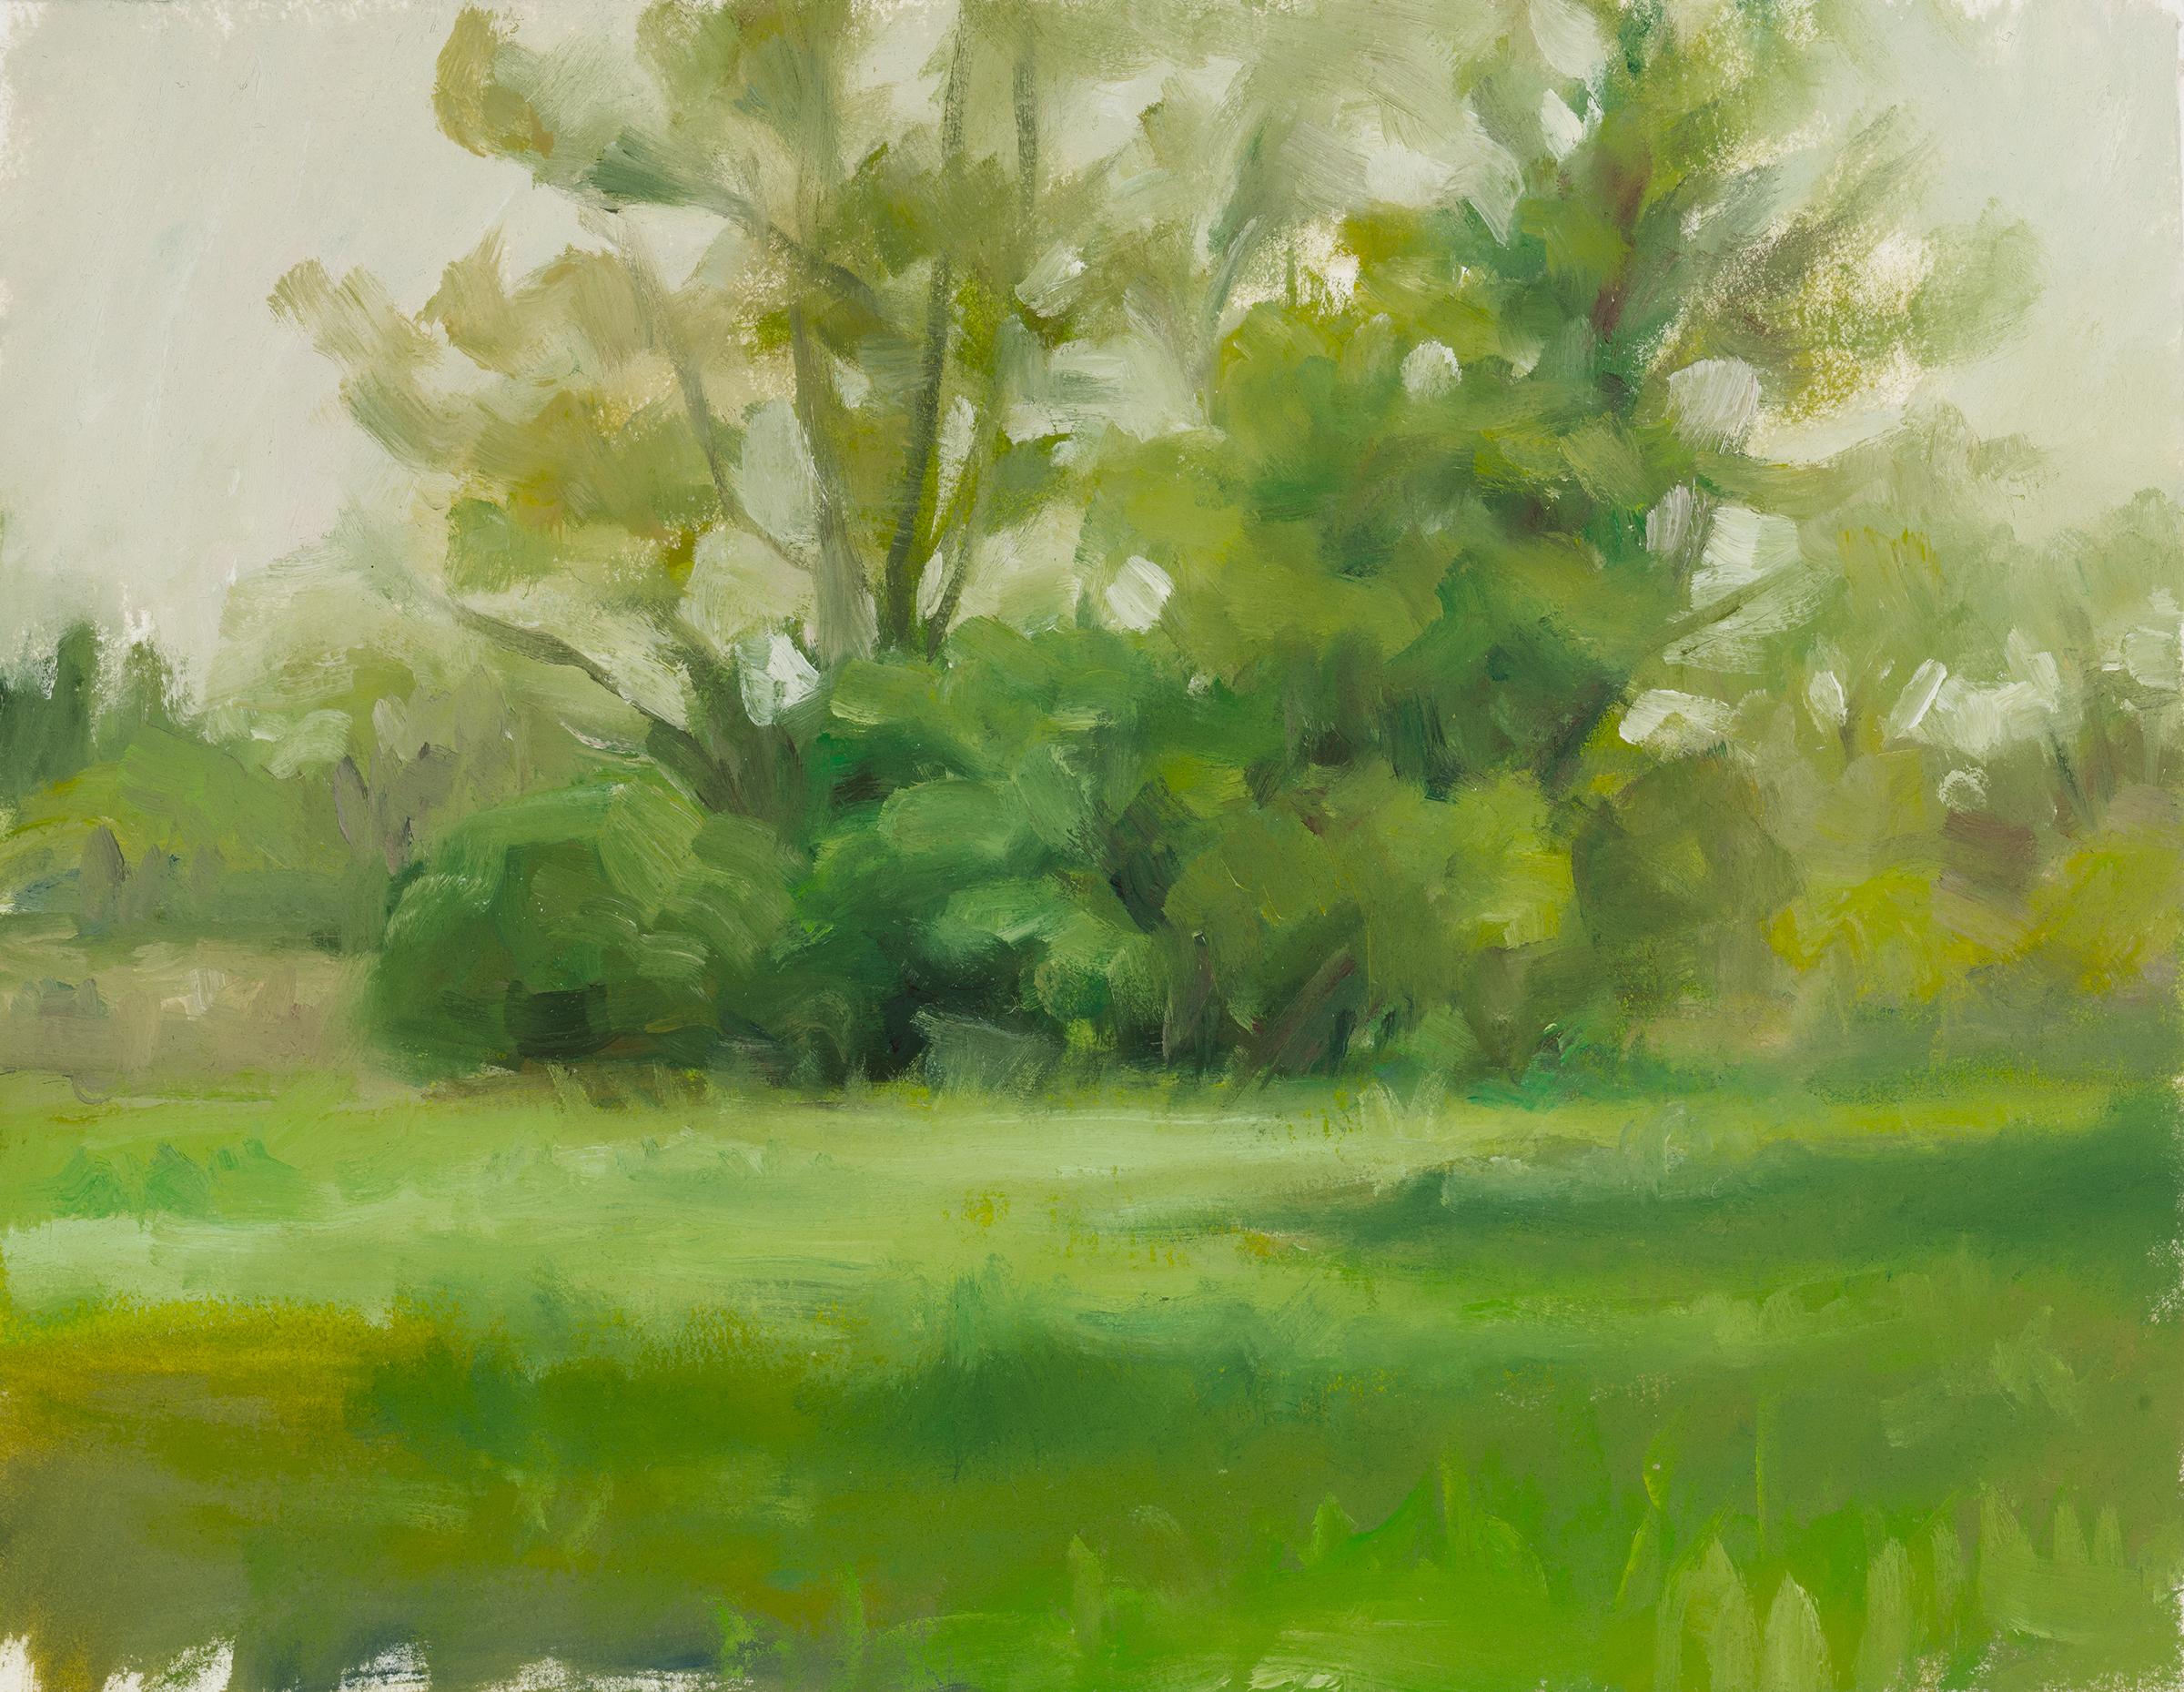 Amanda Joy Brown Landscape Art - PEELER PARK GROVE - Landscape Painting of Trees, Field, & Sky - Oil on Arches